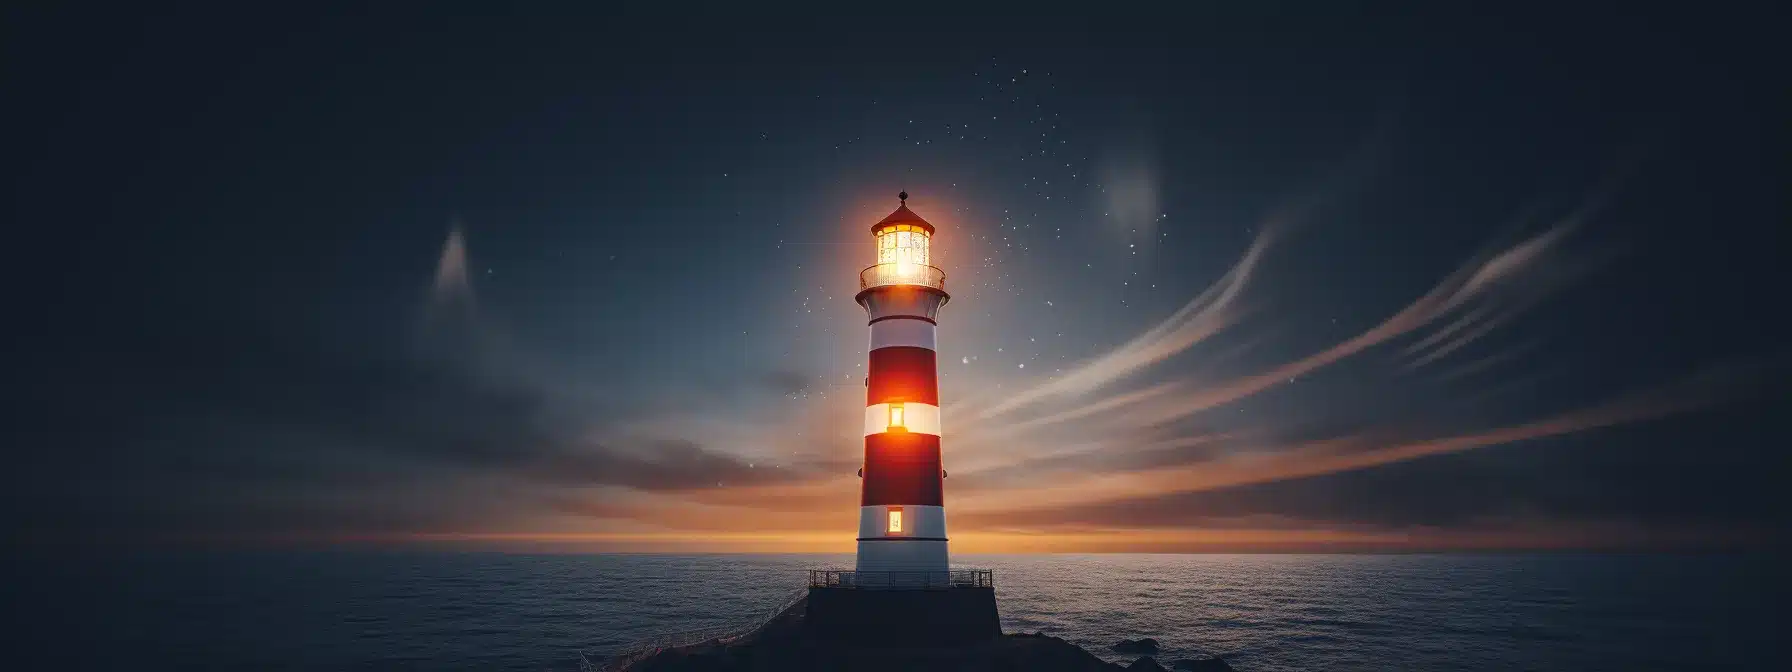 A Brand Logo Lit Up As A Lighthouse, Guiding An Audience Towards A Heart.